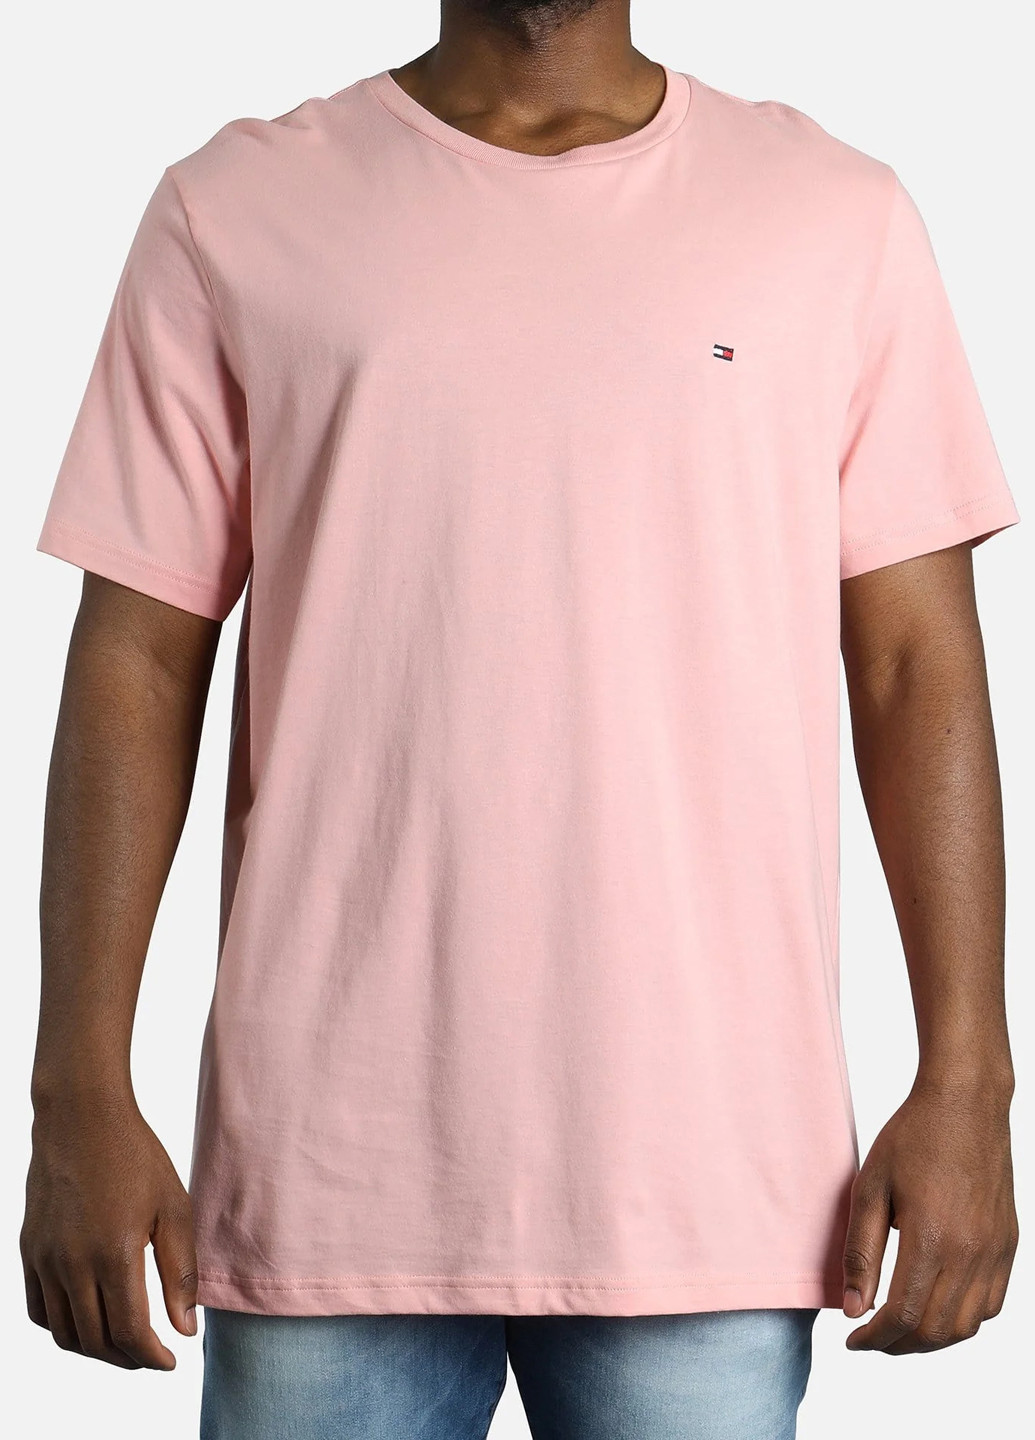 Светло-розовая футболка Tommy Hilfiger